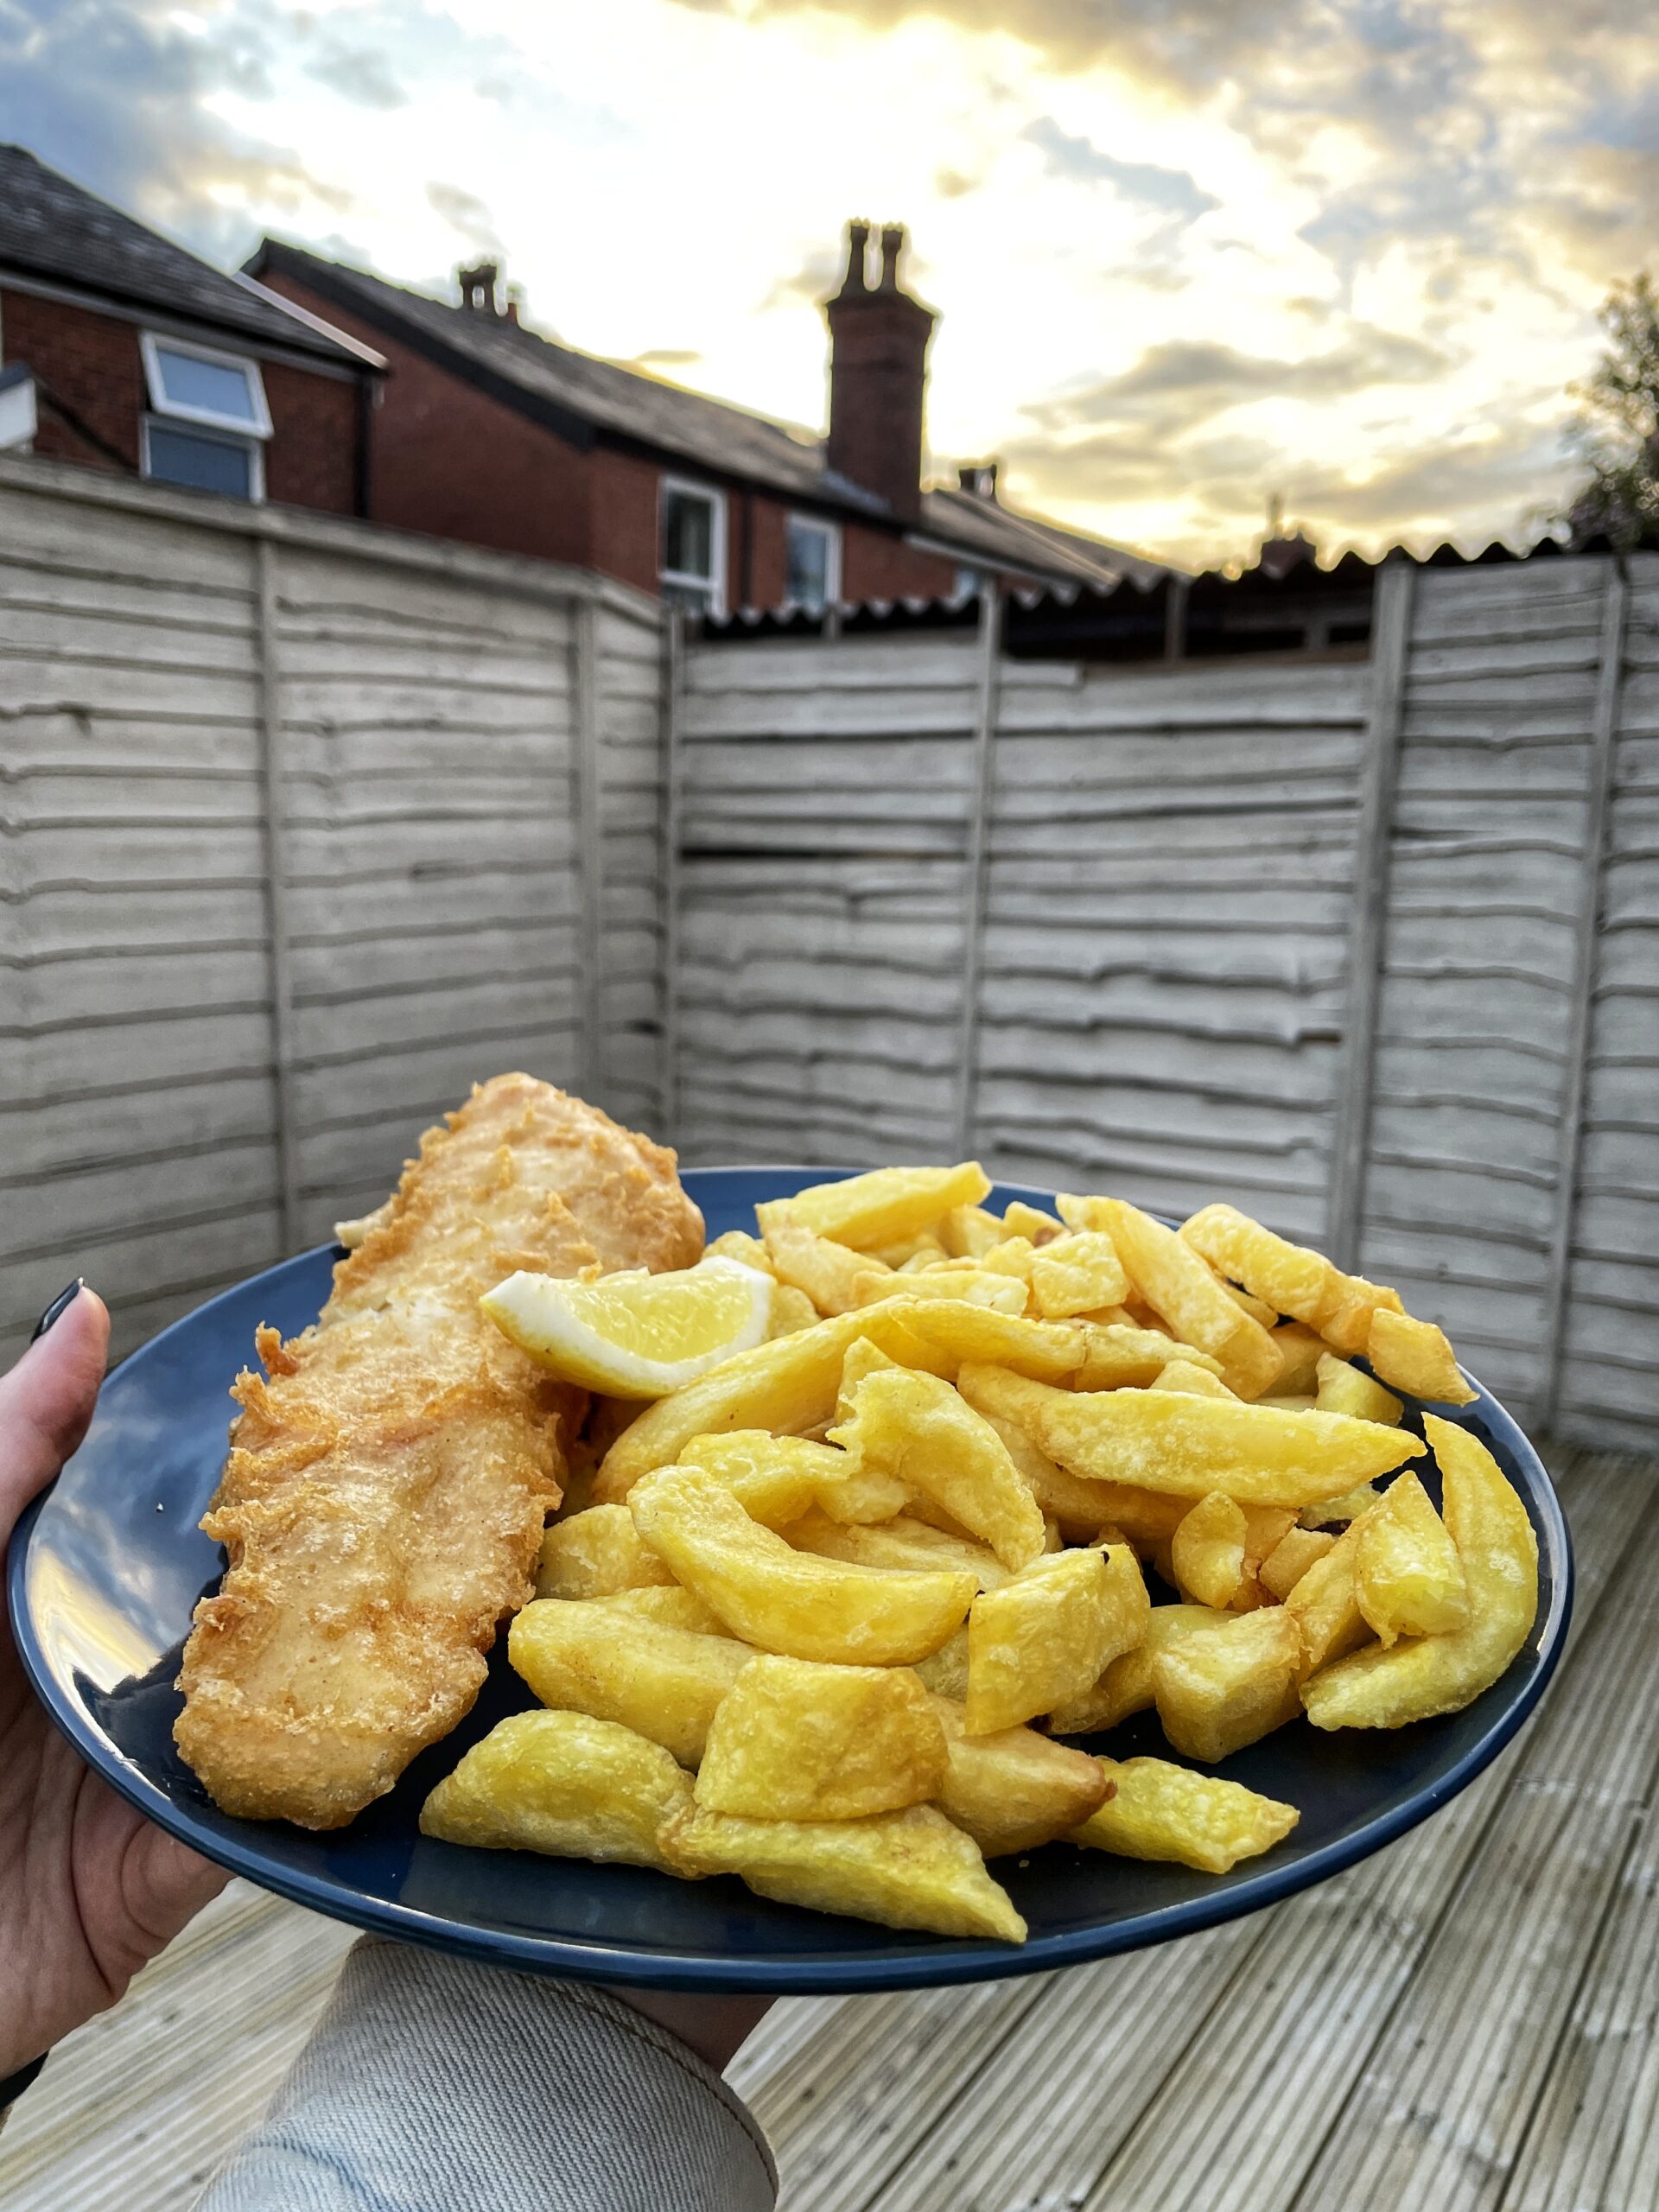 Chips @ No 8 in Prestwich